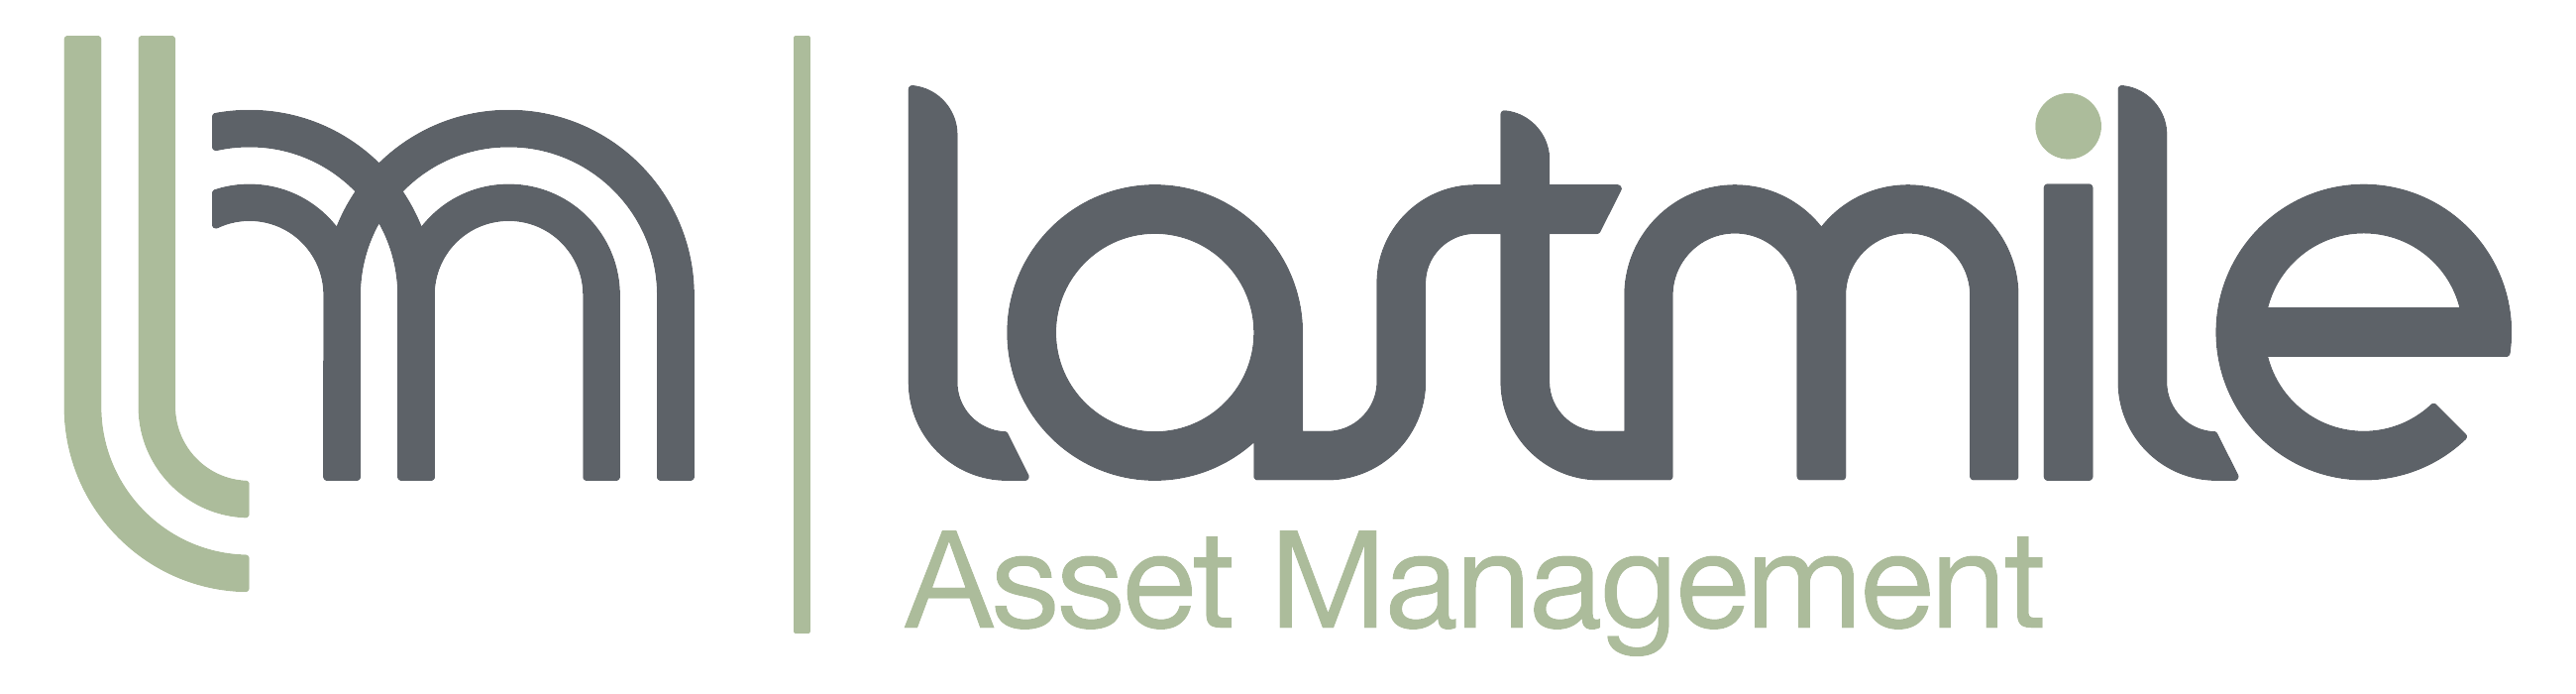 Last Mile Asset Management - Priority Services Register